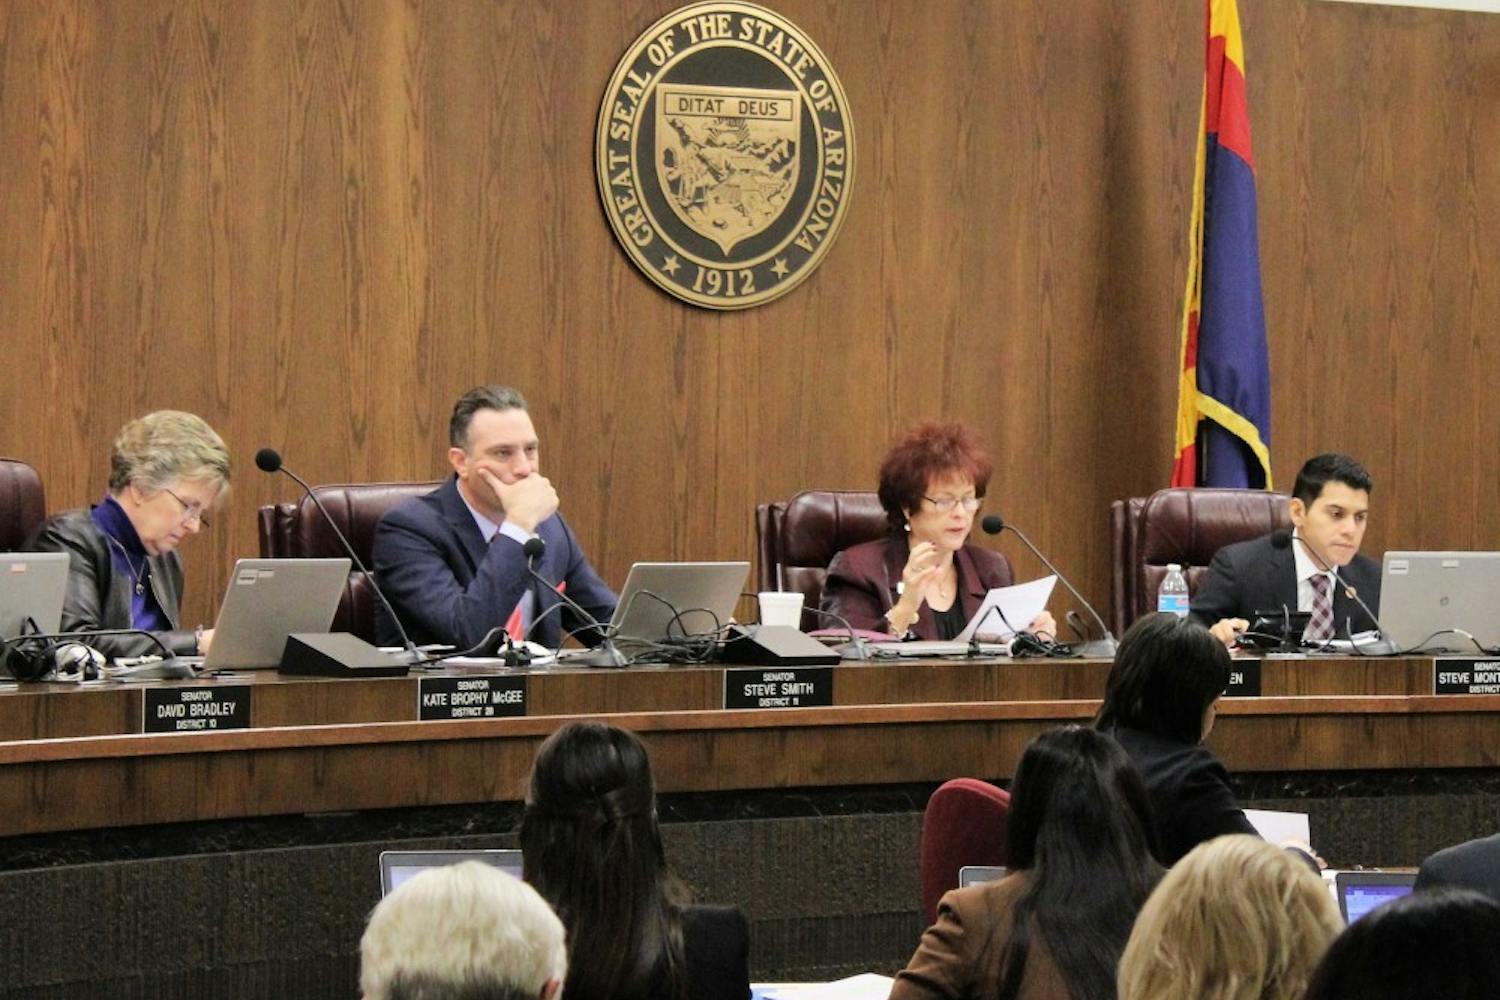 The Arizona Senate Education Committee meets in Senate Hearing Room 1 on Thursday, Jan. 26, 2017.